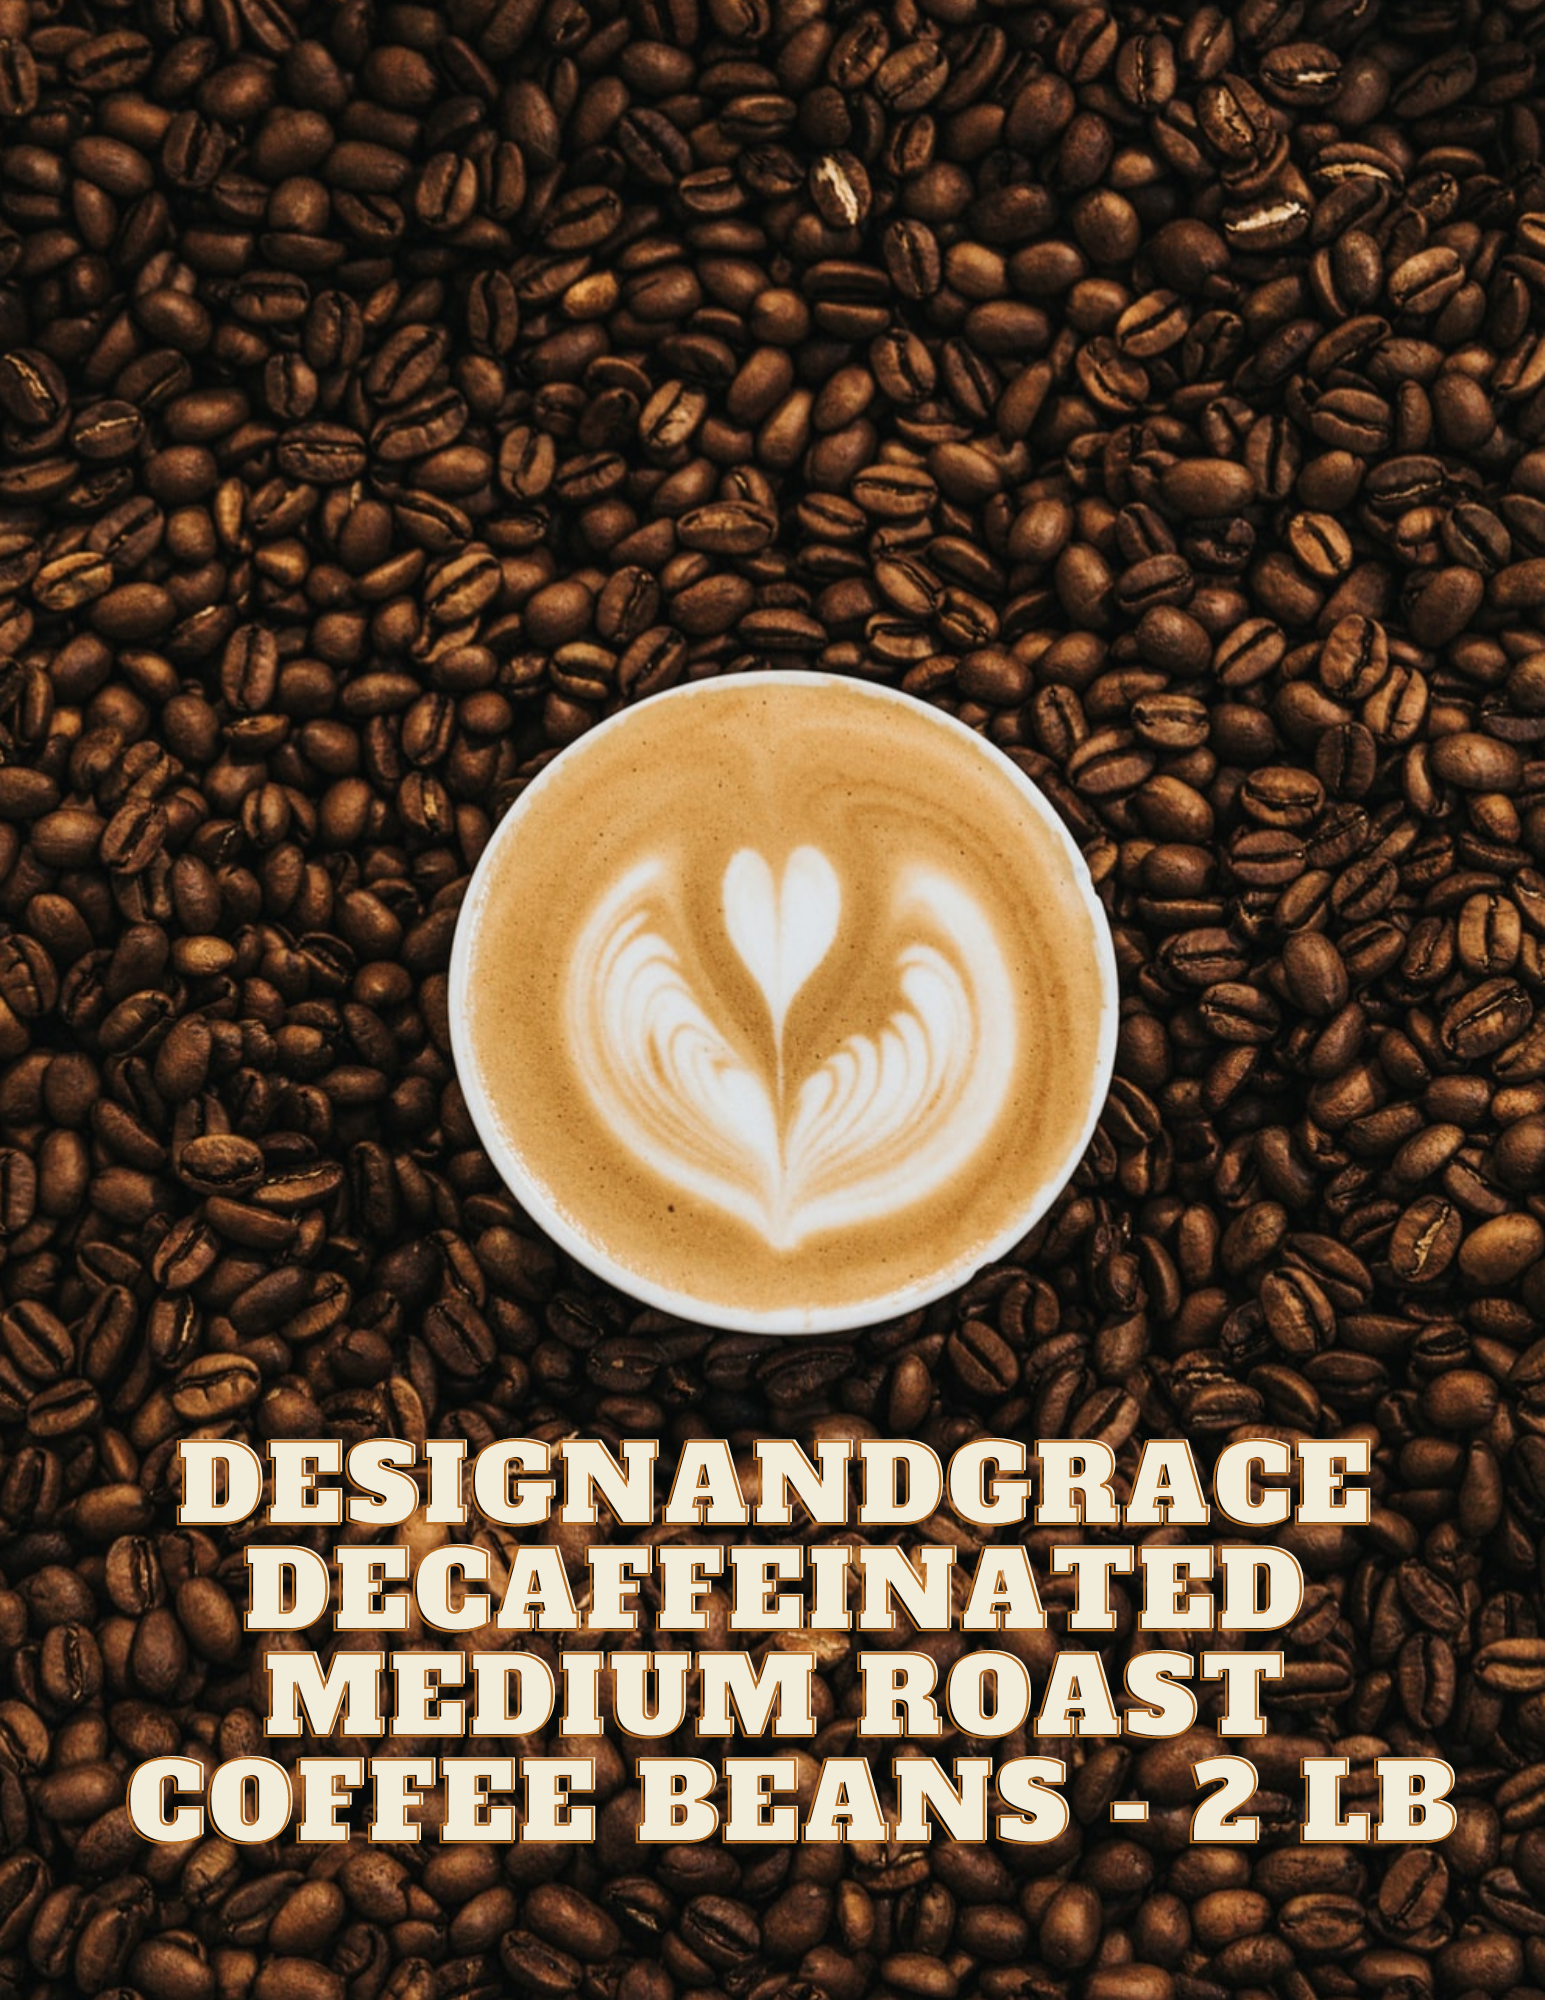 DesignandGrace Decaffeinated Medium Roast Coffee Beans - 2 lb